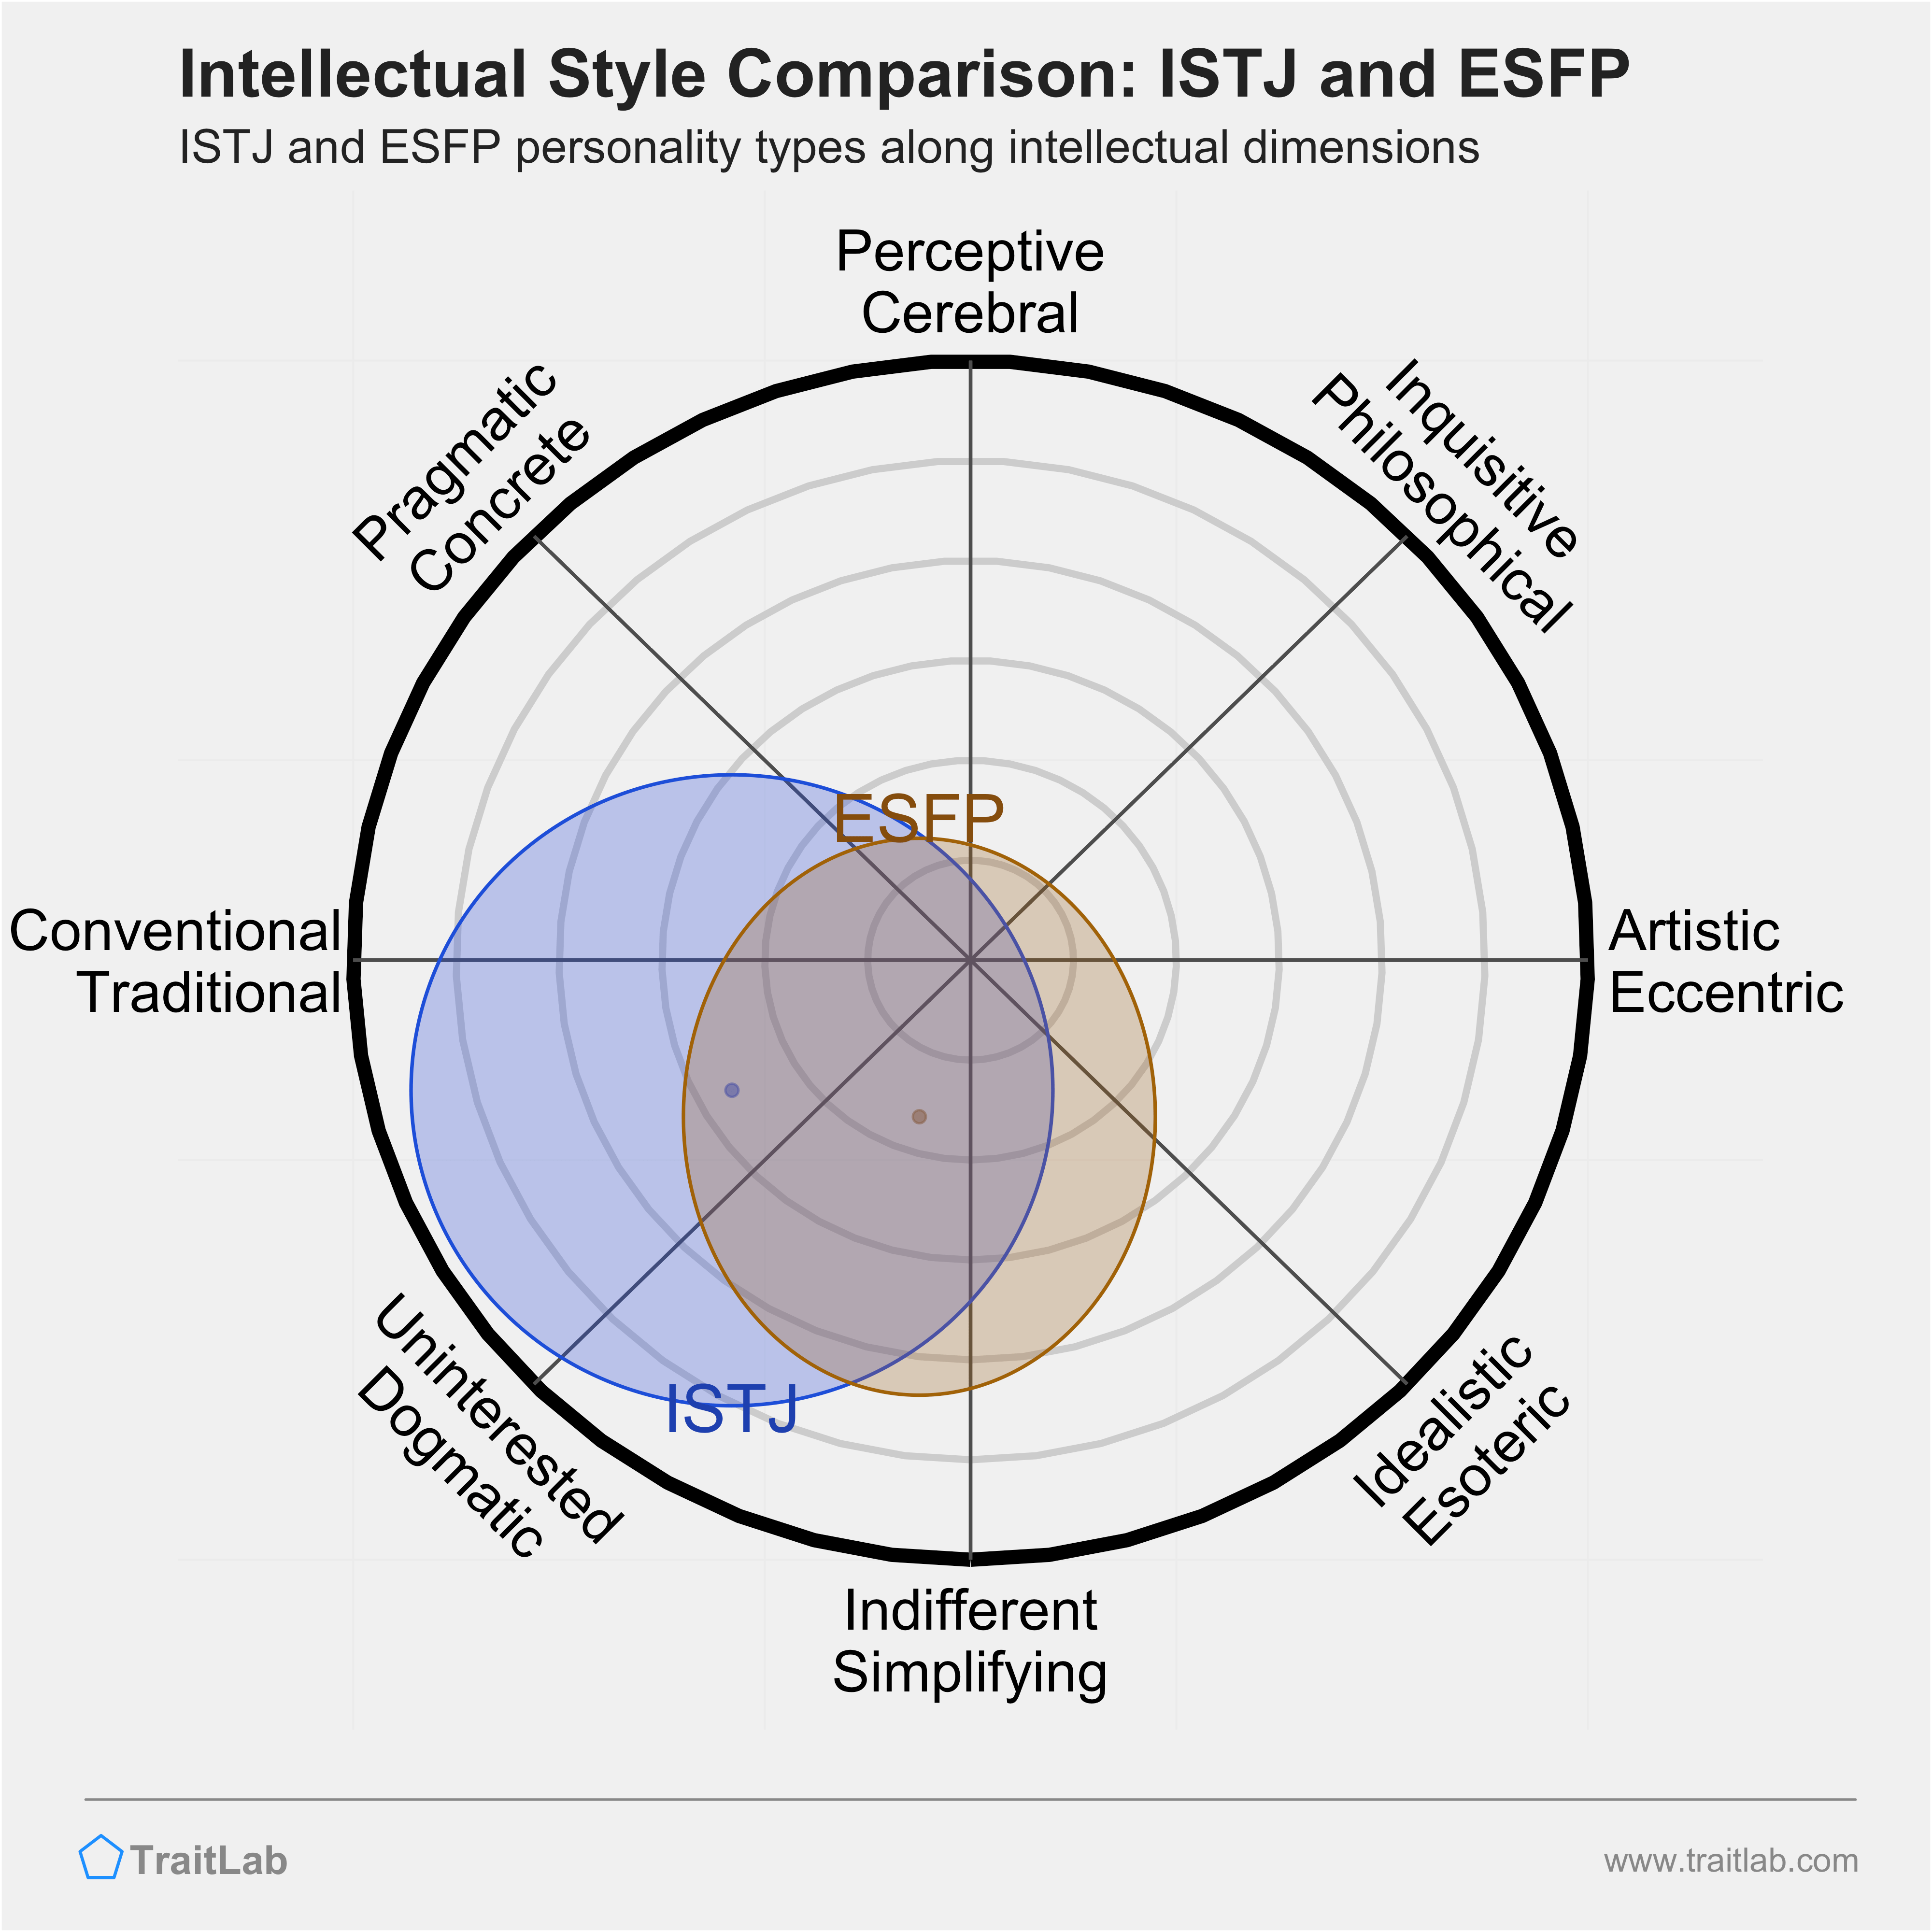 ISTJ and ESFP comparison across intellectual dimensions